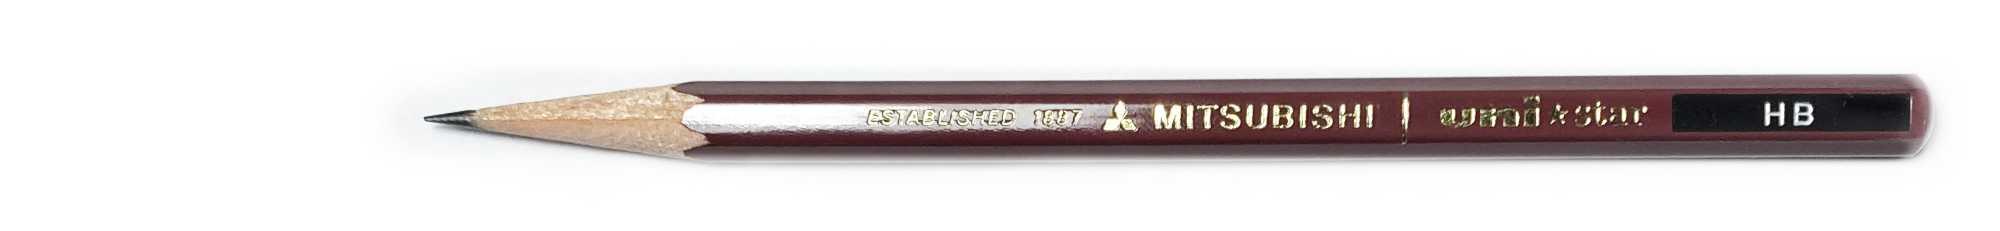 Mitsubishi Uni-Star Pencil